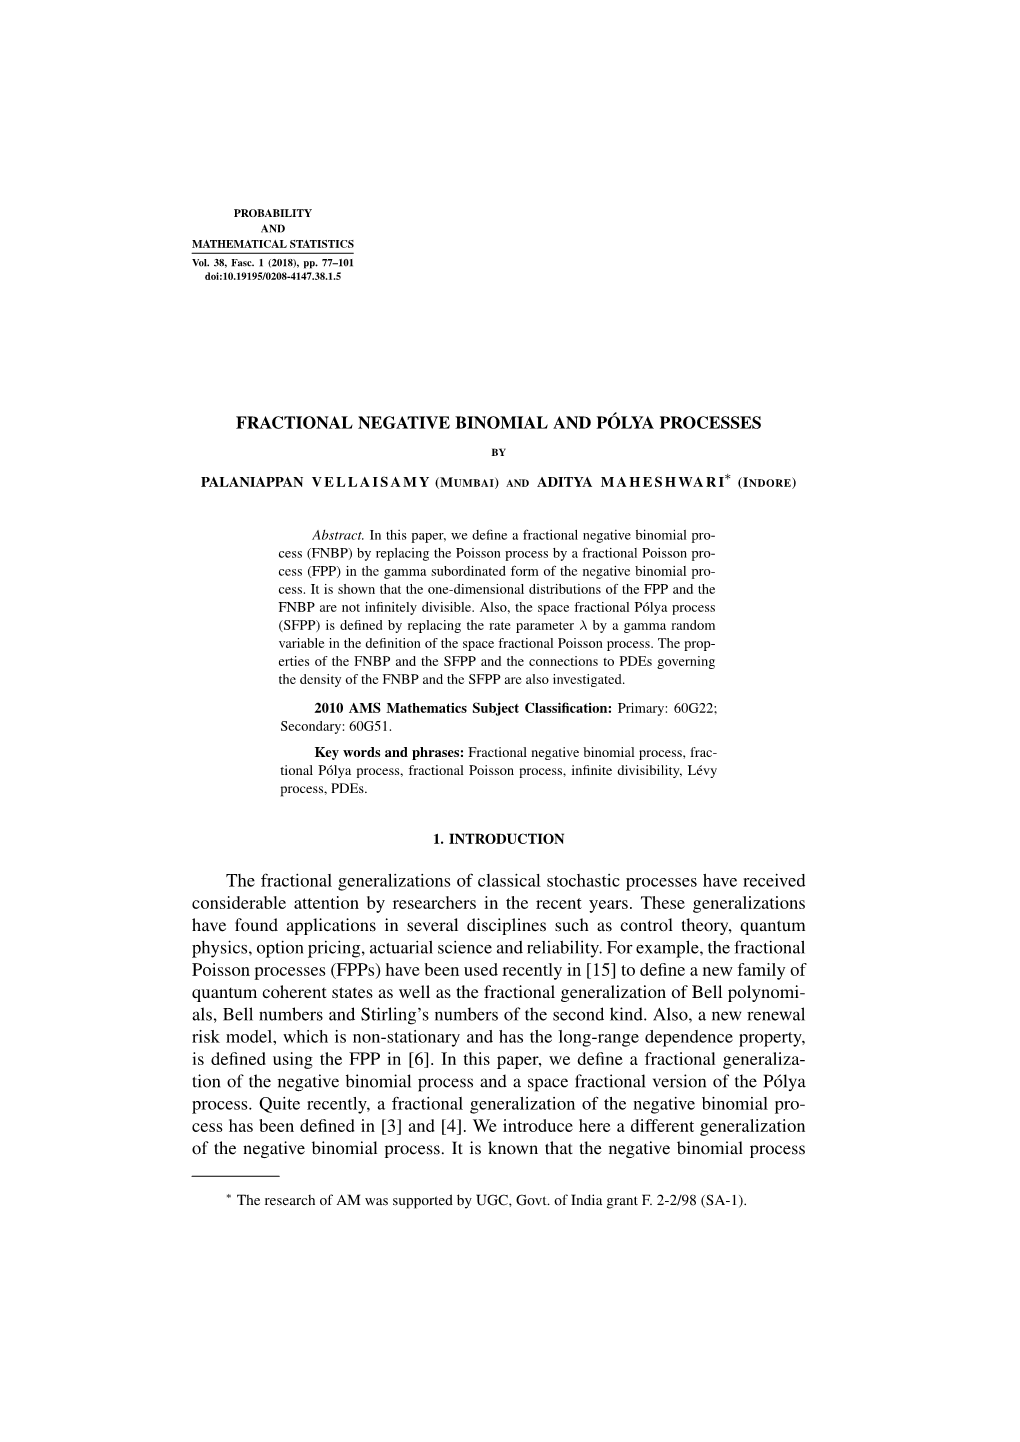 Fractional Negative Binomial and Pólya Processes